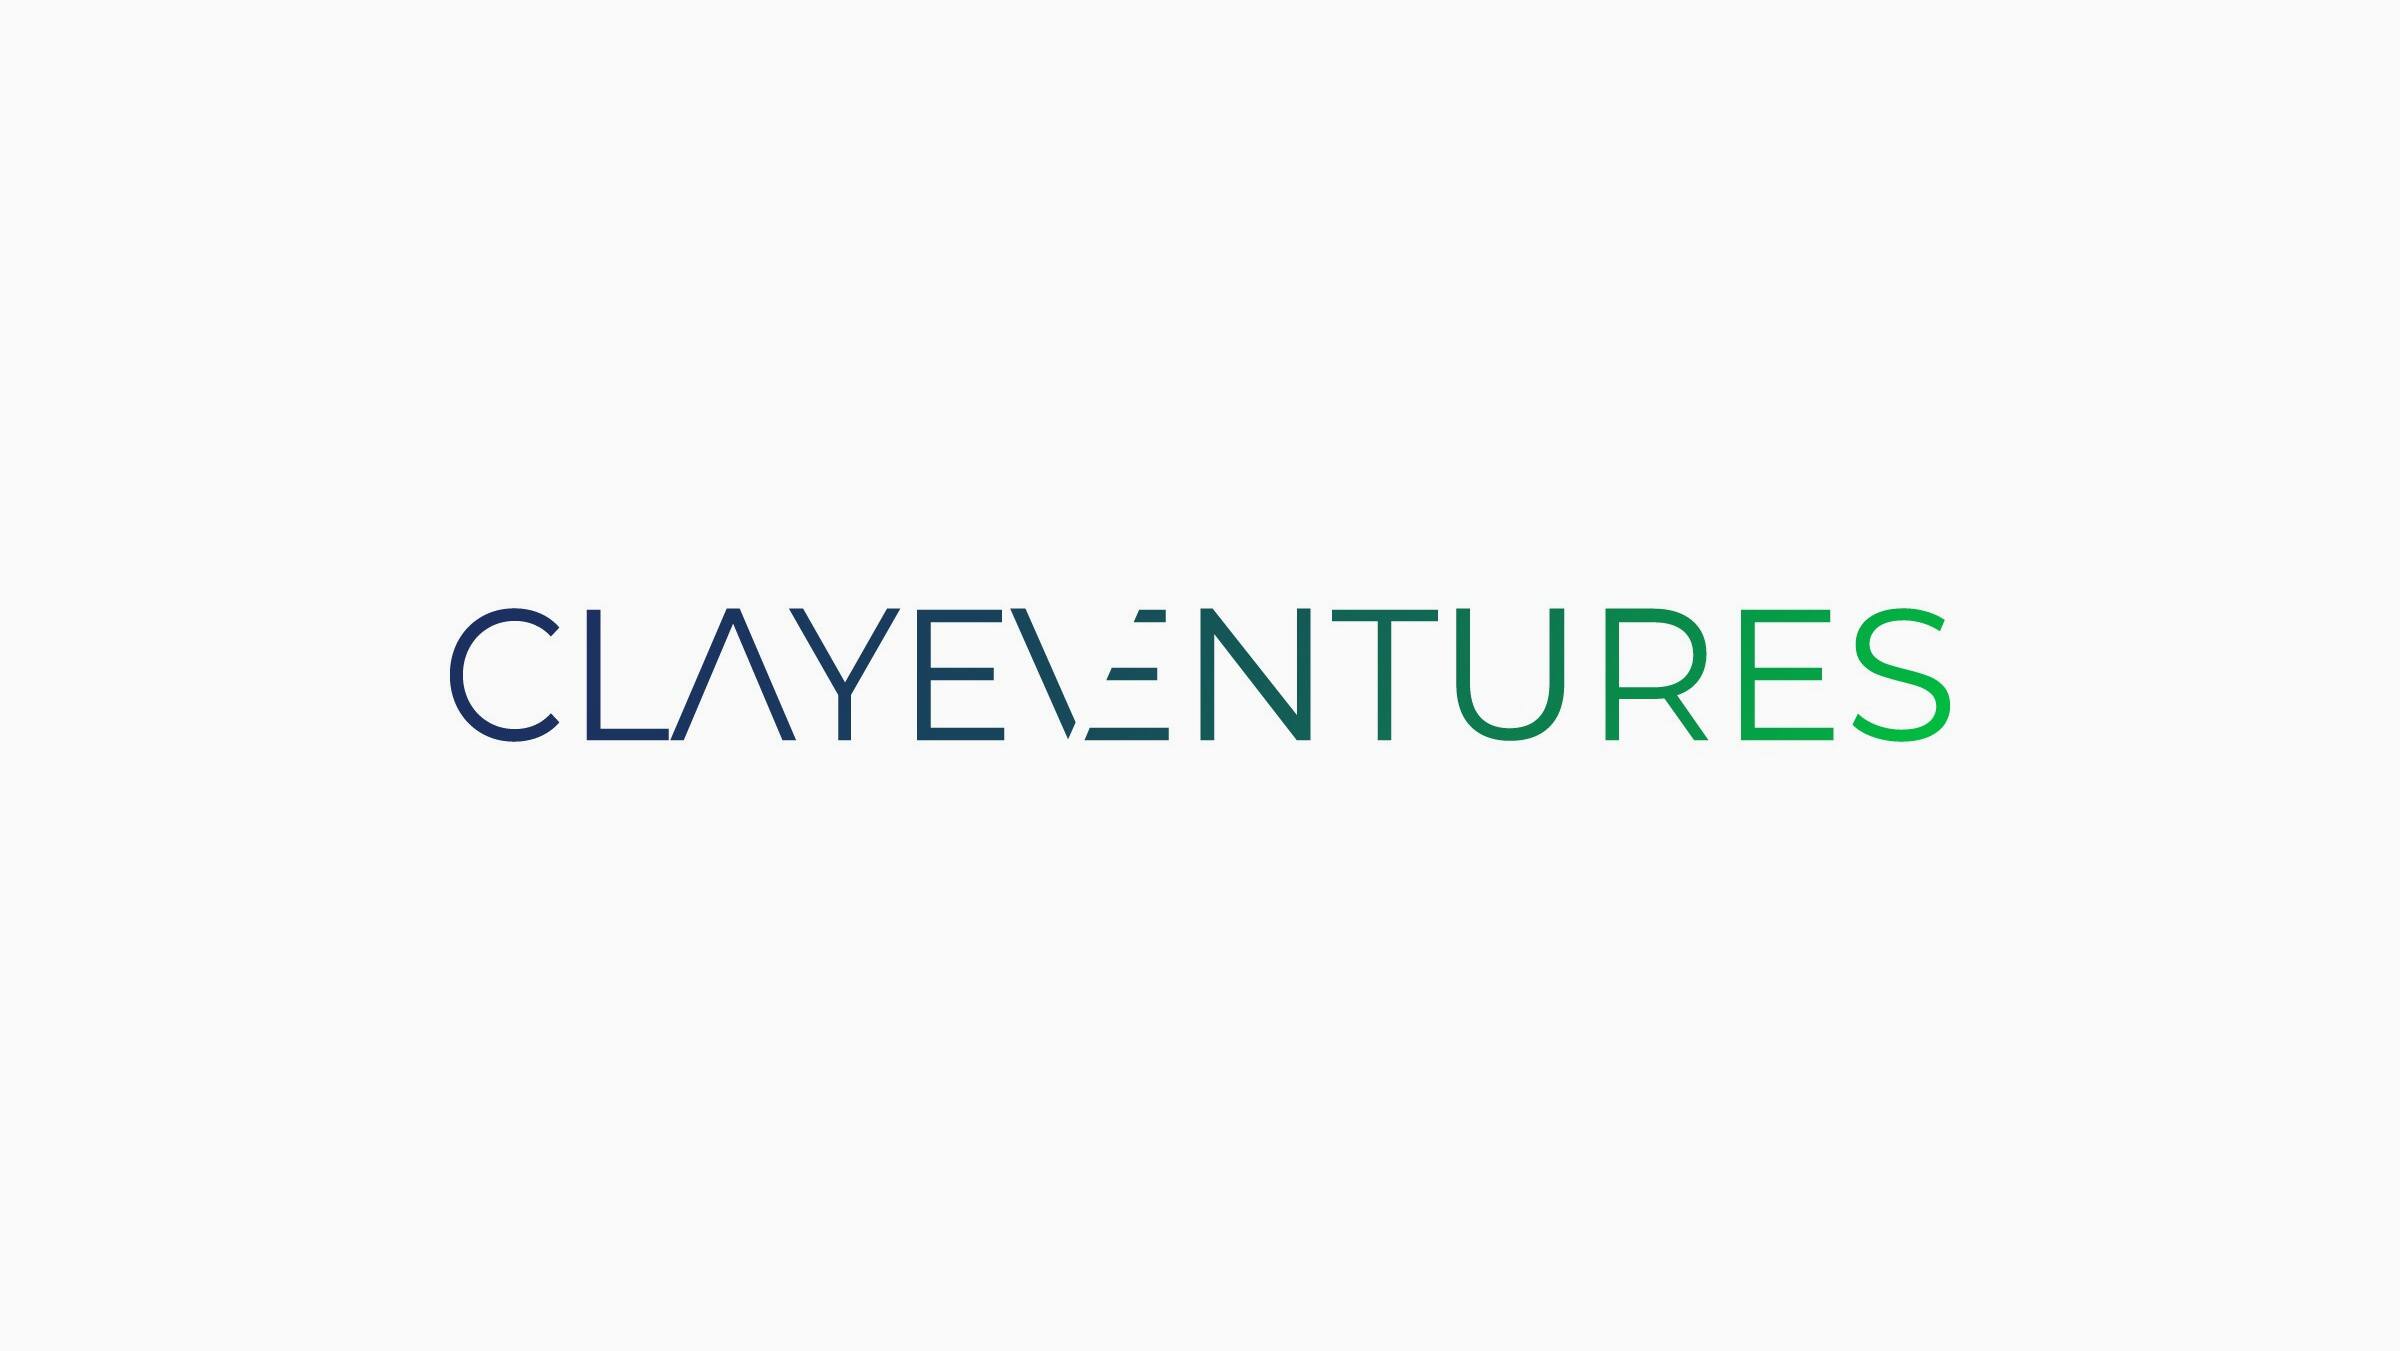 The Claye Ventures logo